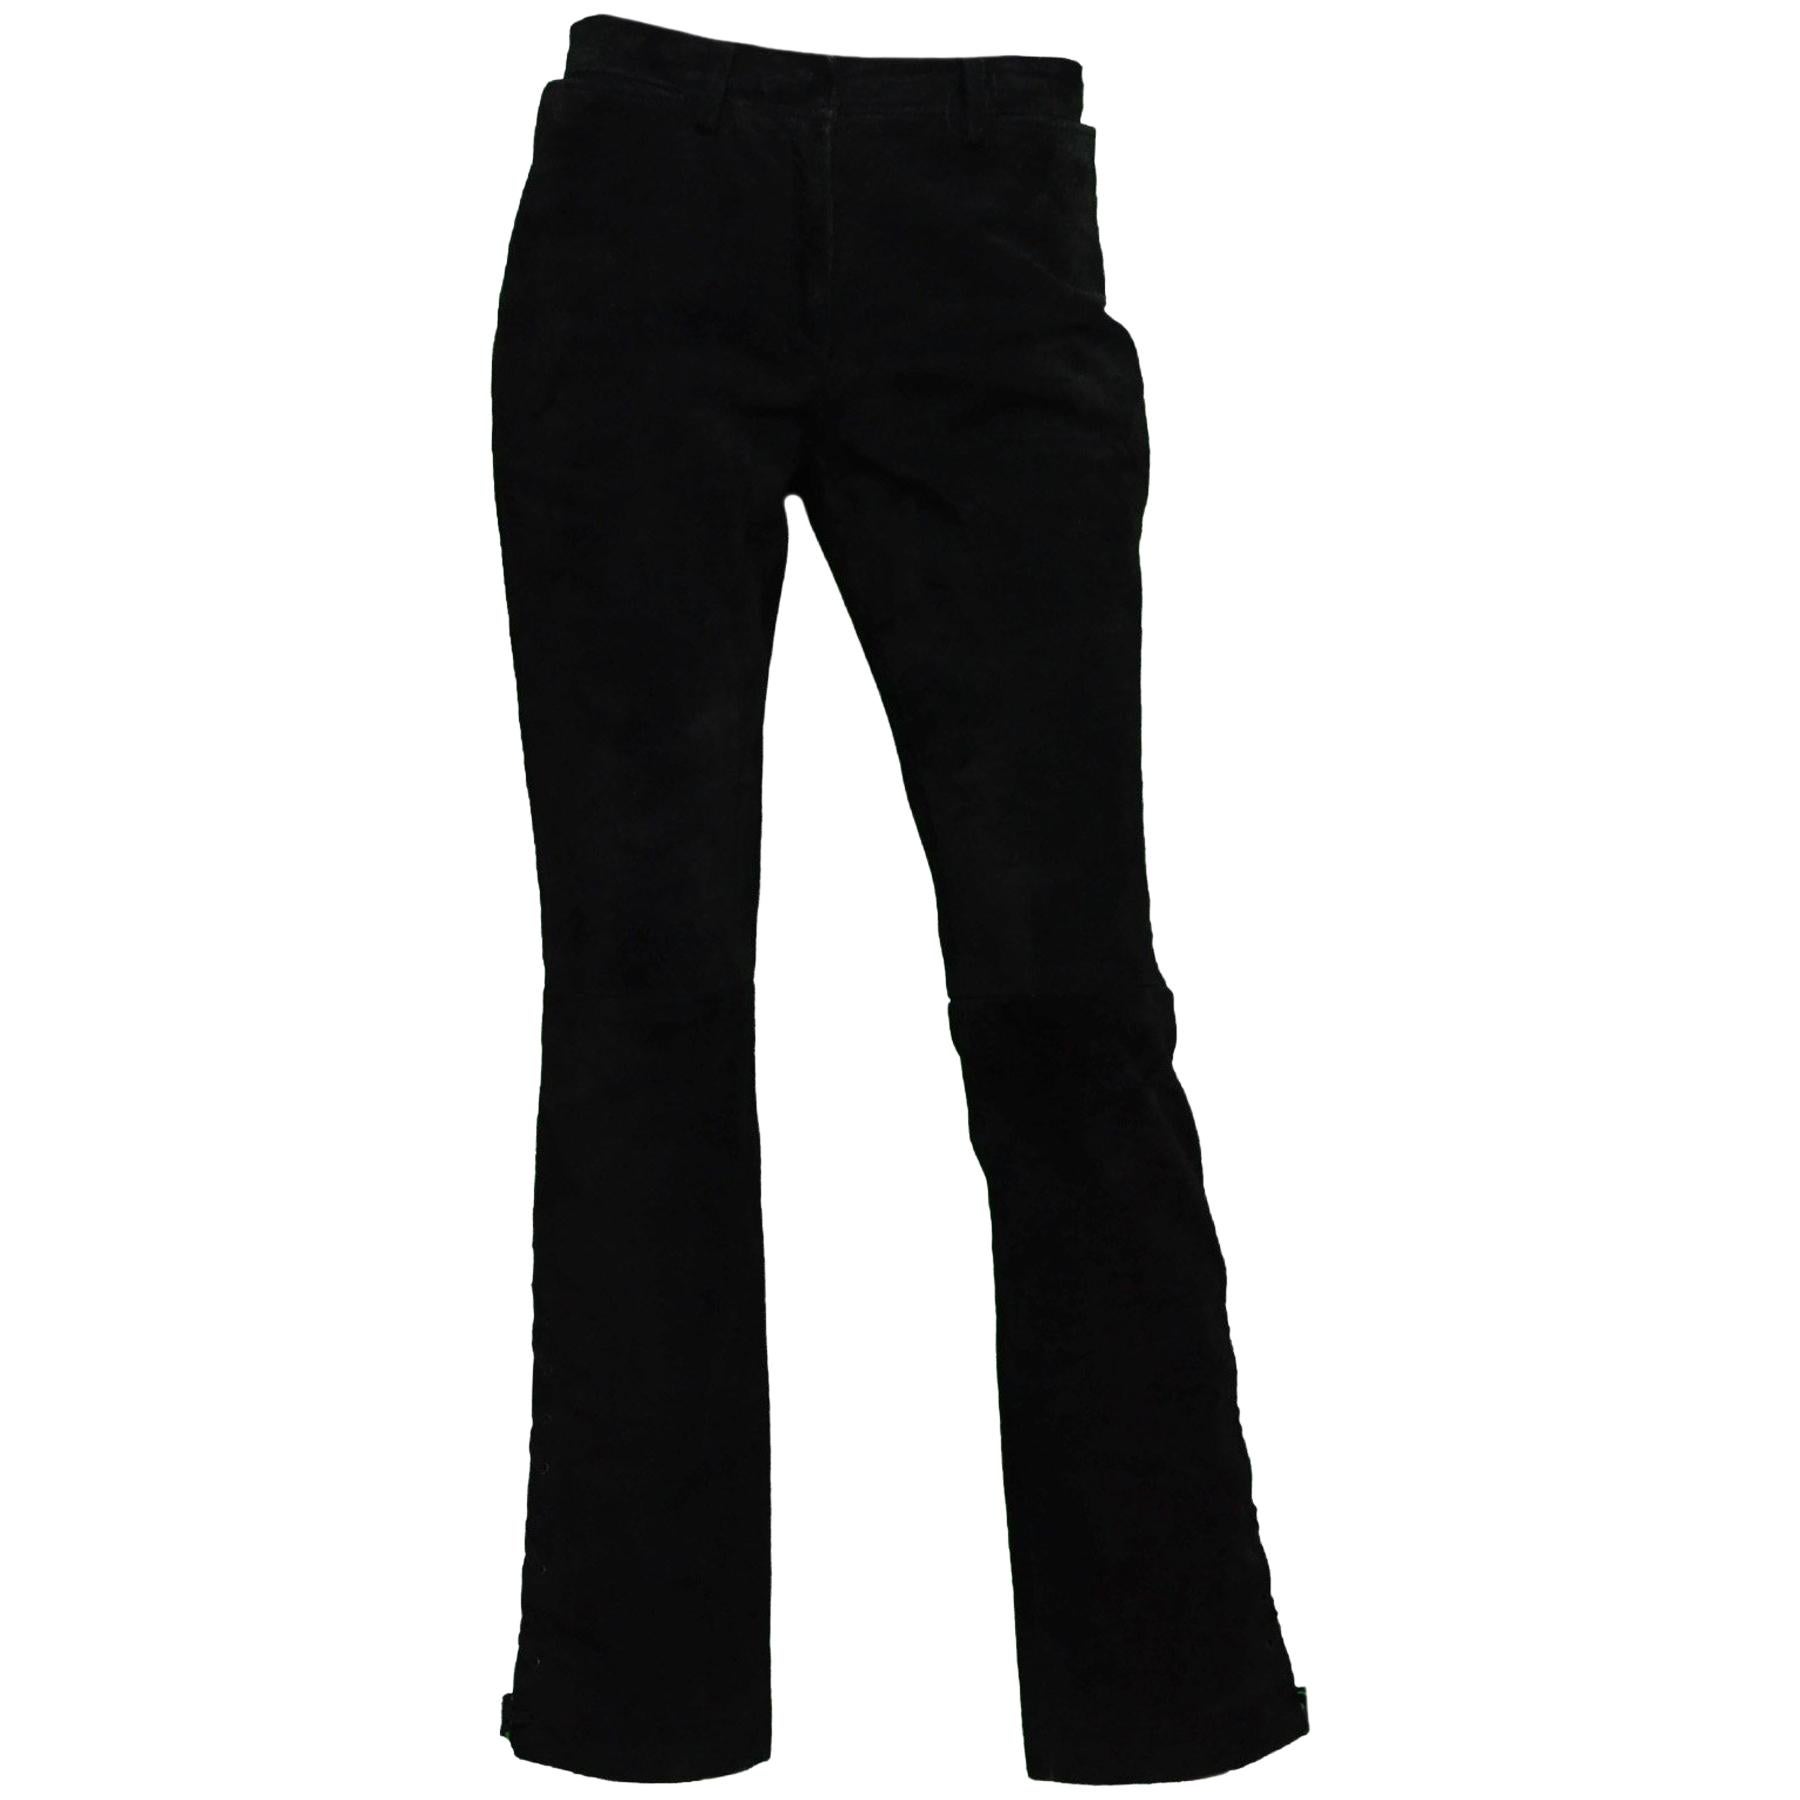 YSL Yves Saint Laurent Black Suede Pants W/ Side Lace Up Bottom Sz 36